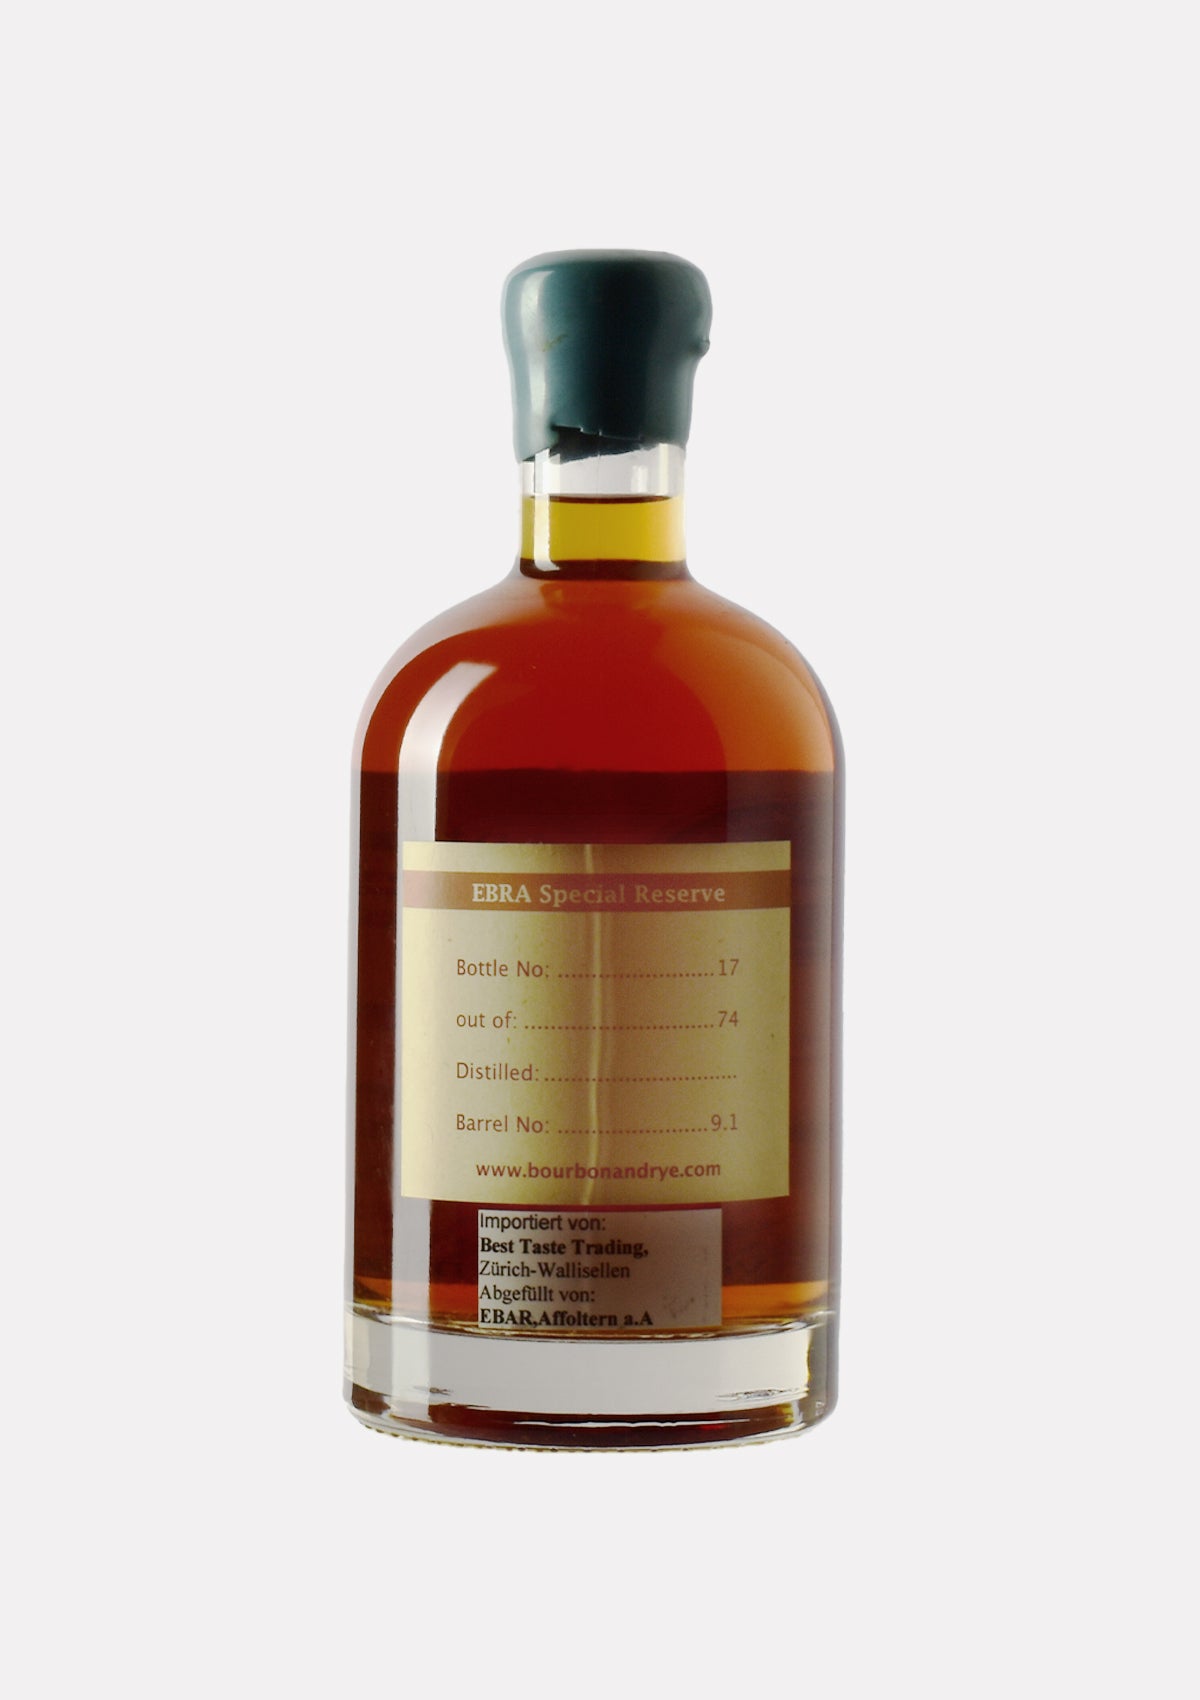 EBRA Straight Bourbon Whiskey 9.1